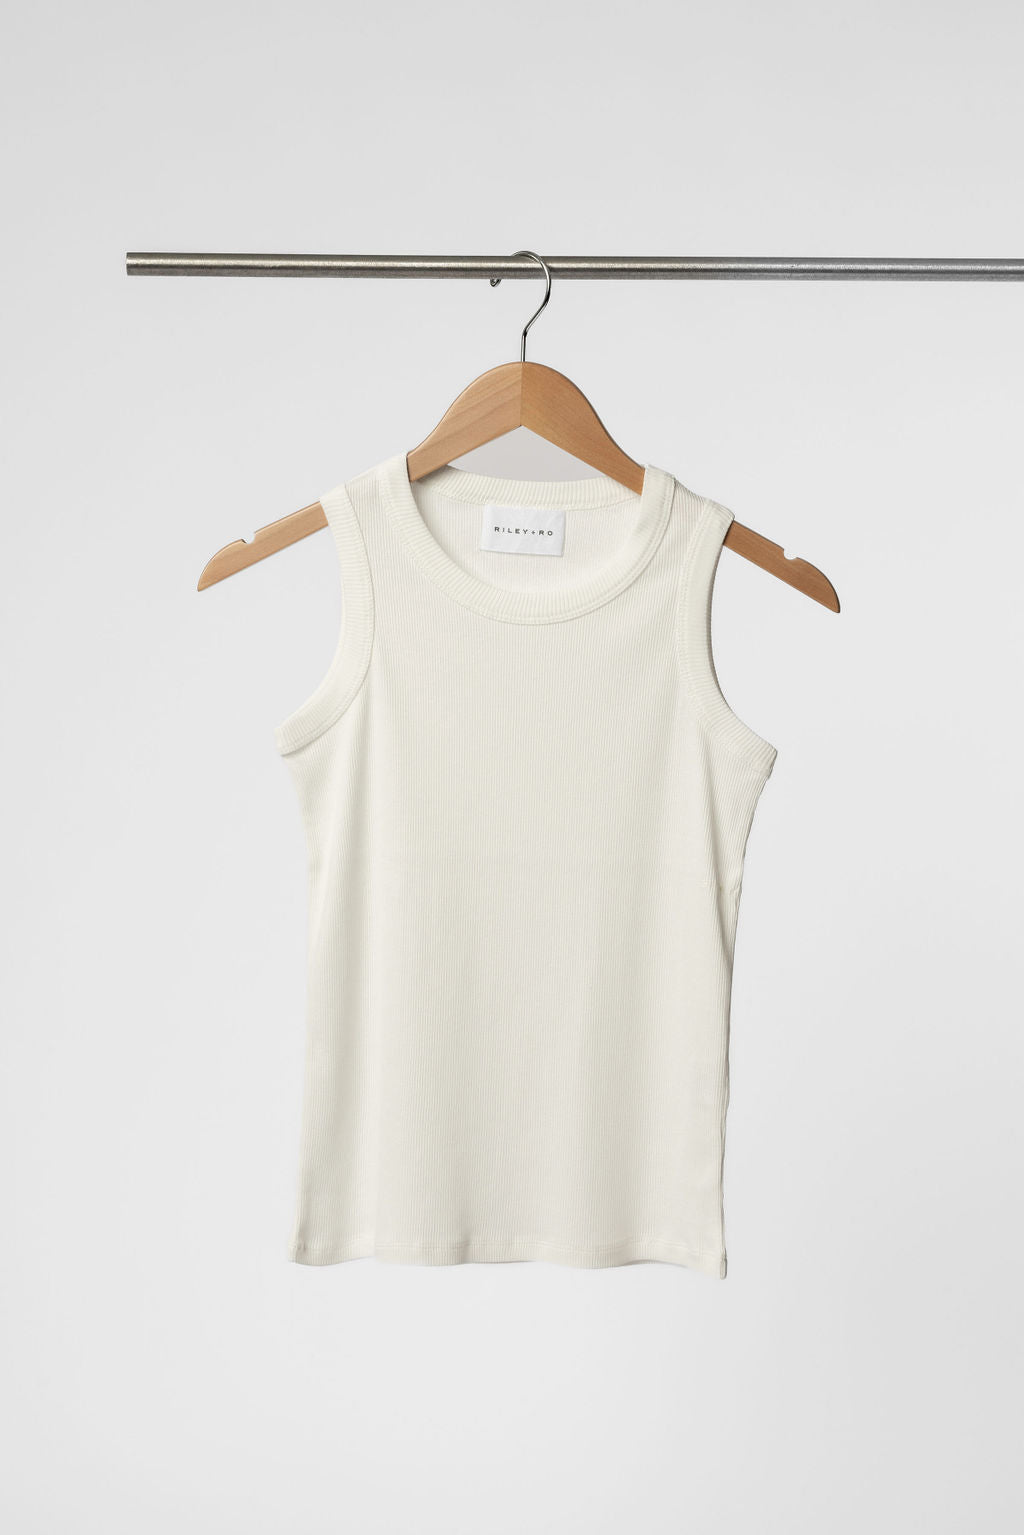 Minimalist Capsule Wardrobe 100% Organic Cotton Basic White Tank on Hanger